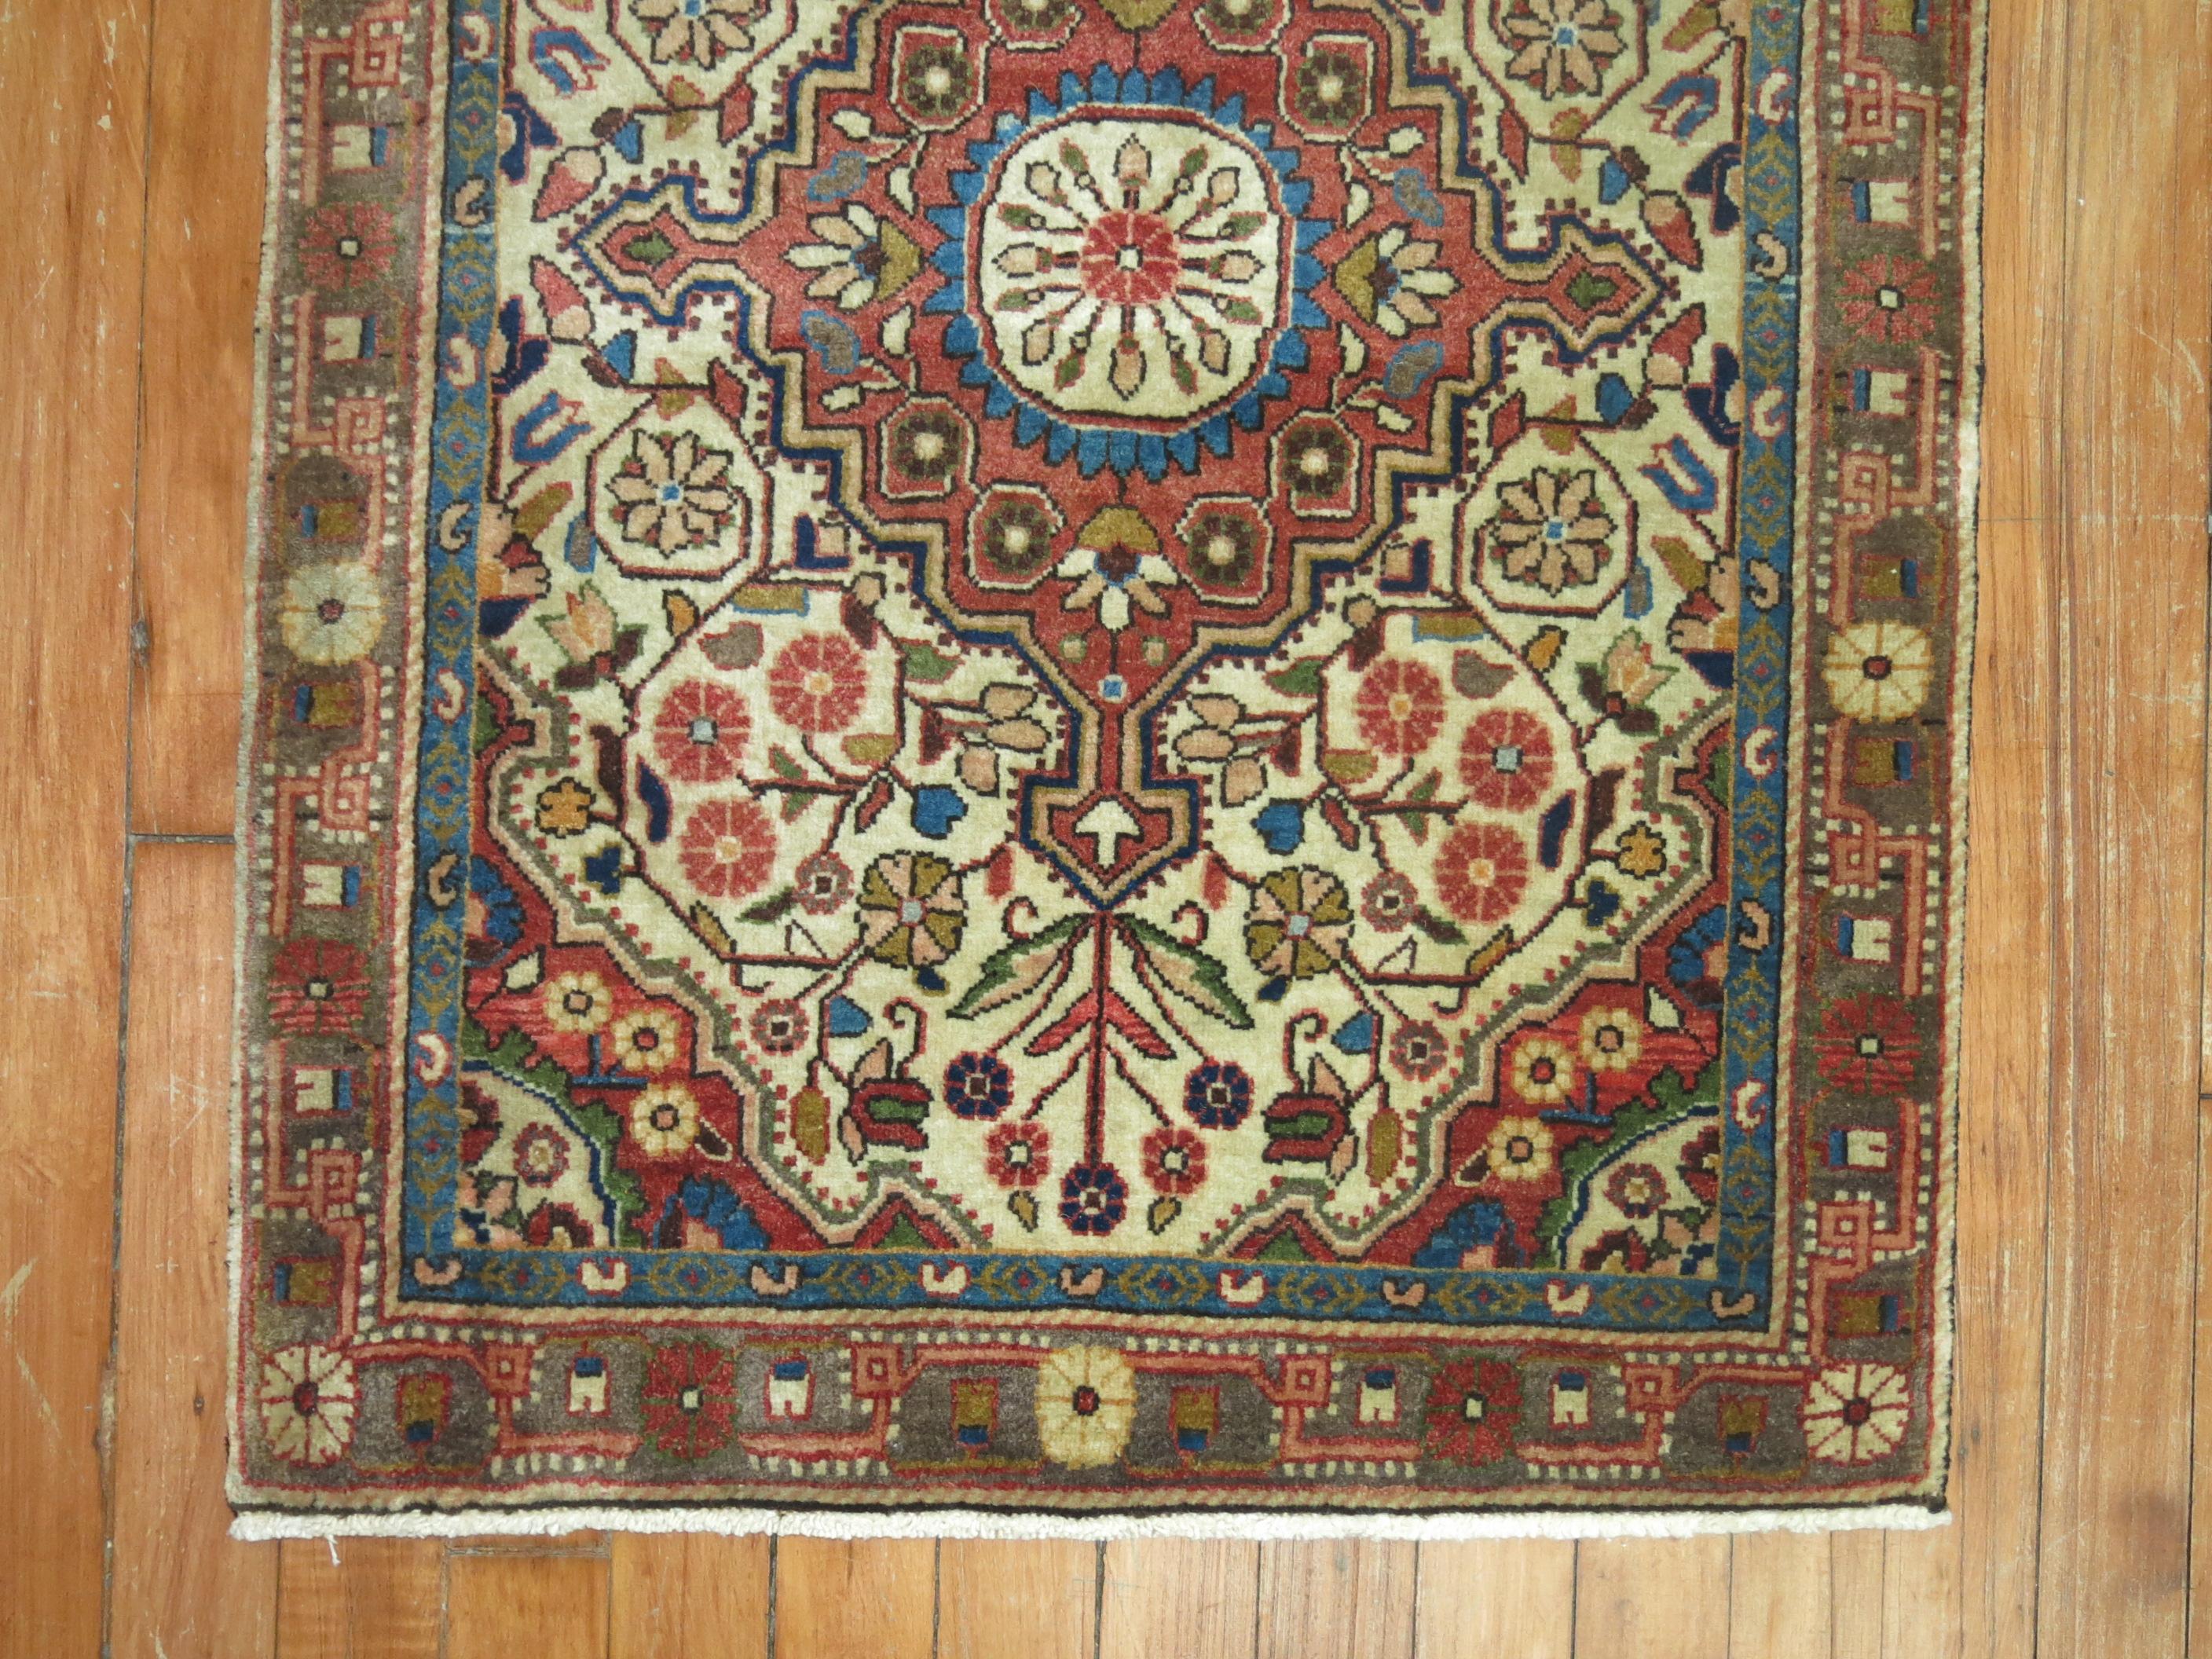 a mid-20th century mat size jozan sarouk rug

Measures: 2' x 2'11”.

